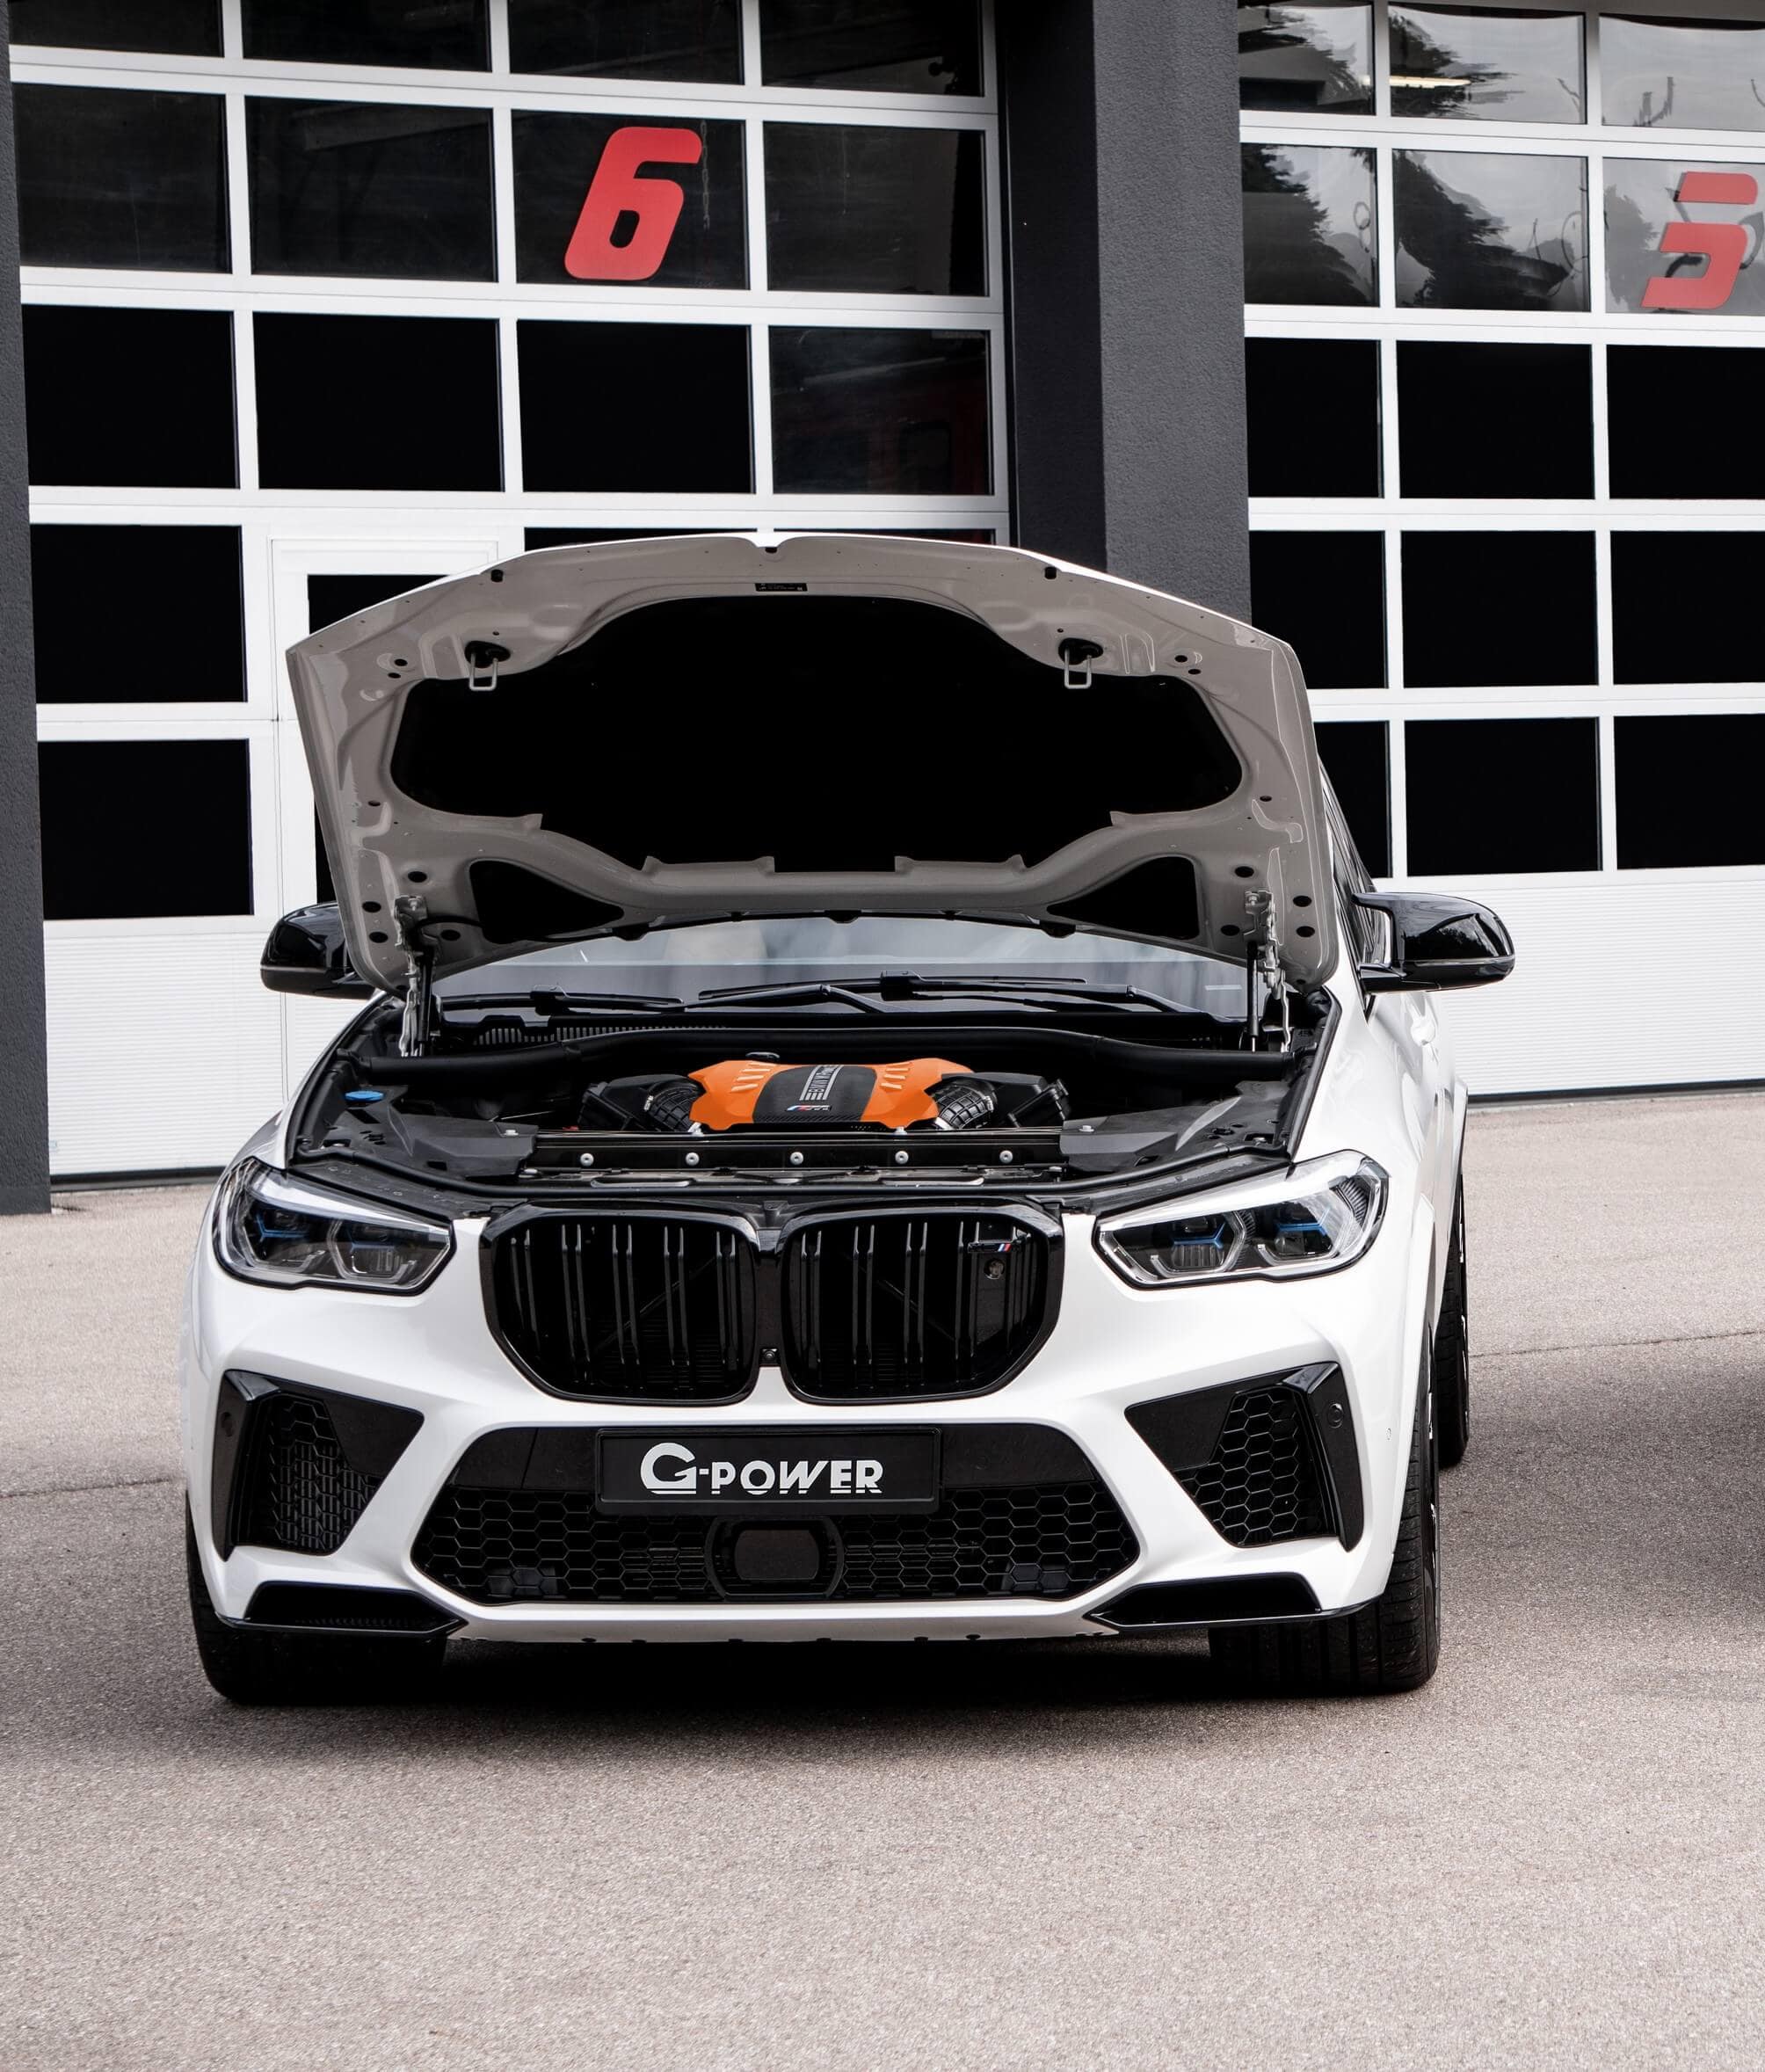 BMW X5 M G Power tuning2 1